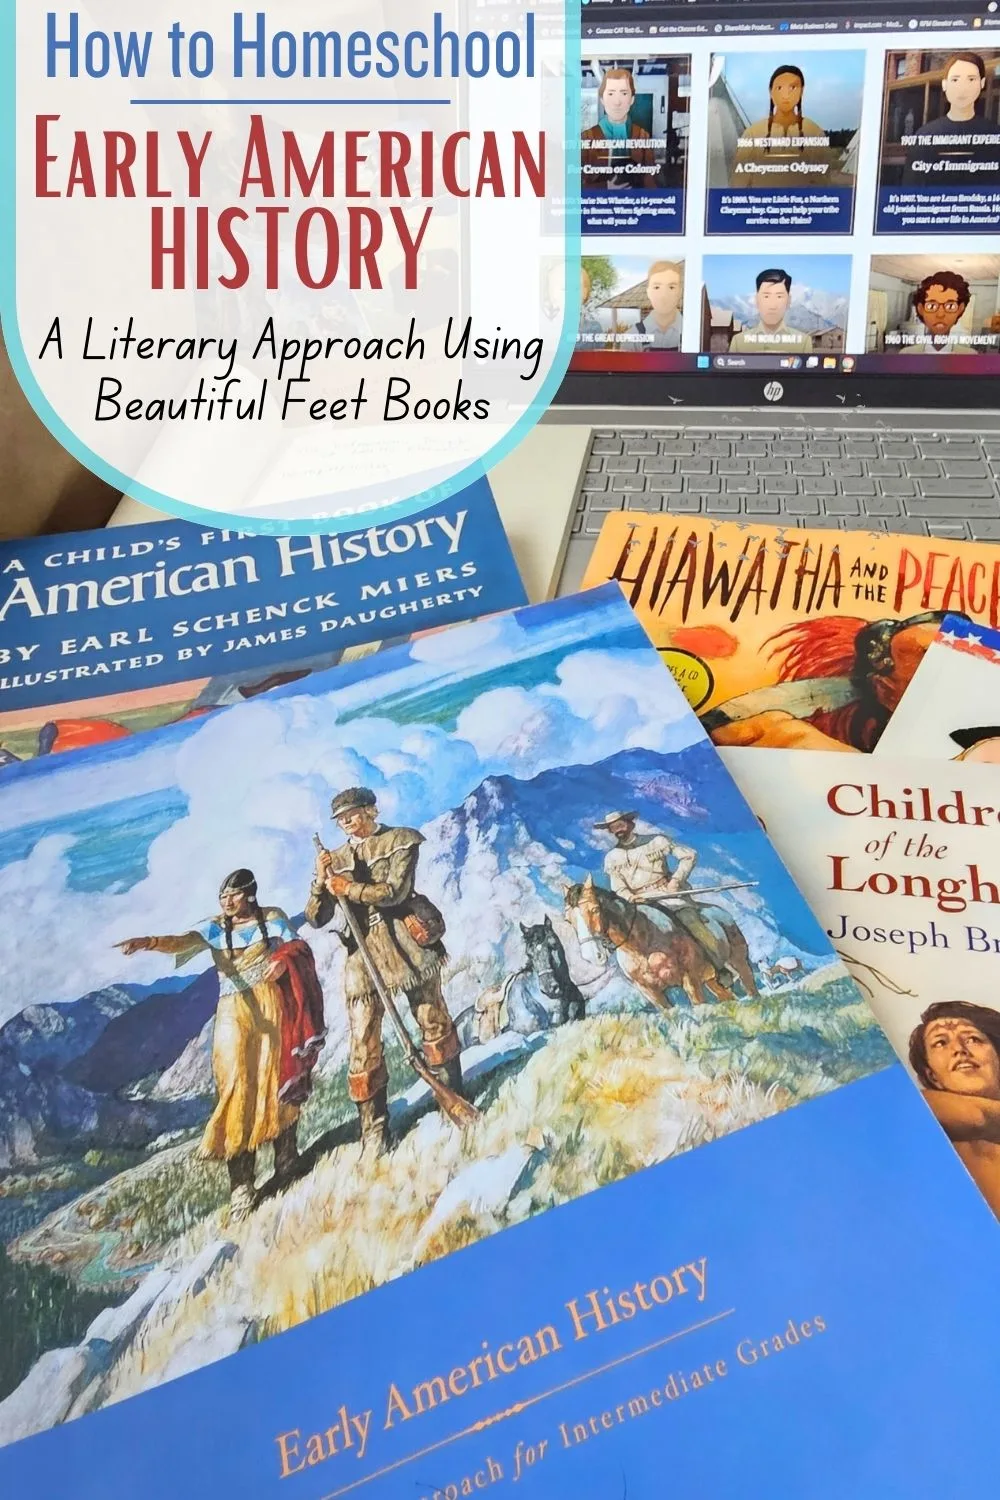 How to Homeschool Early American History Using Beautiful Feet Books